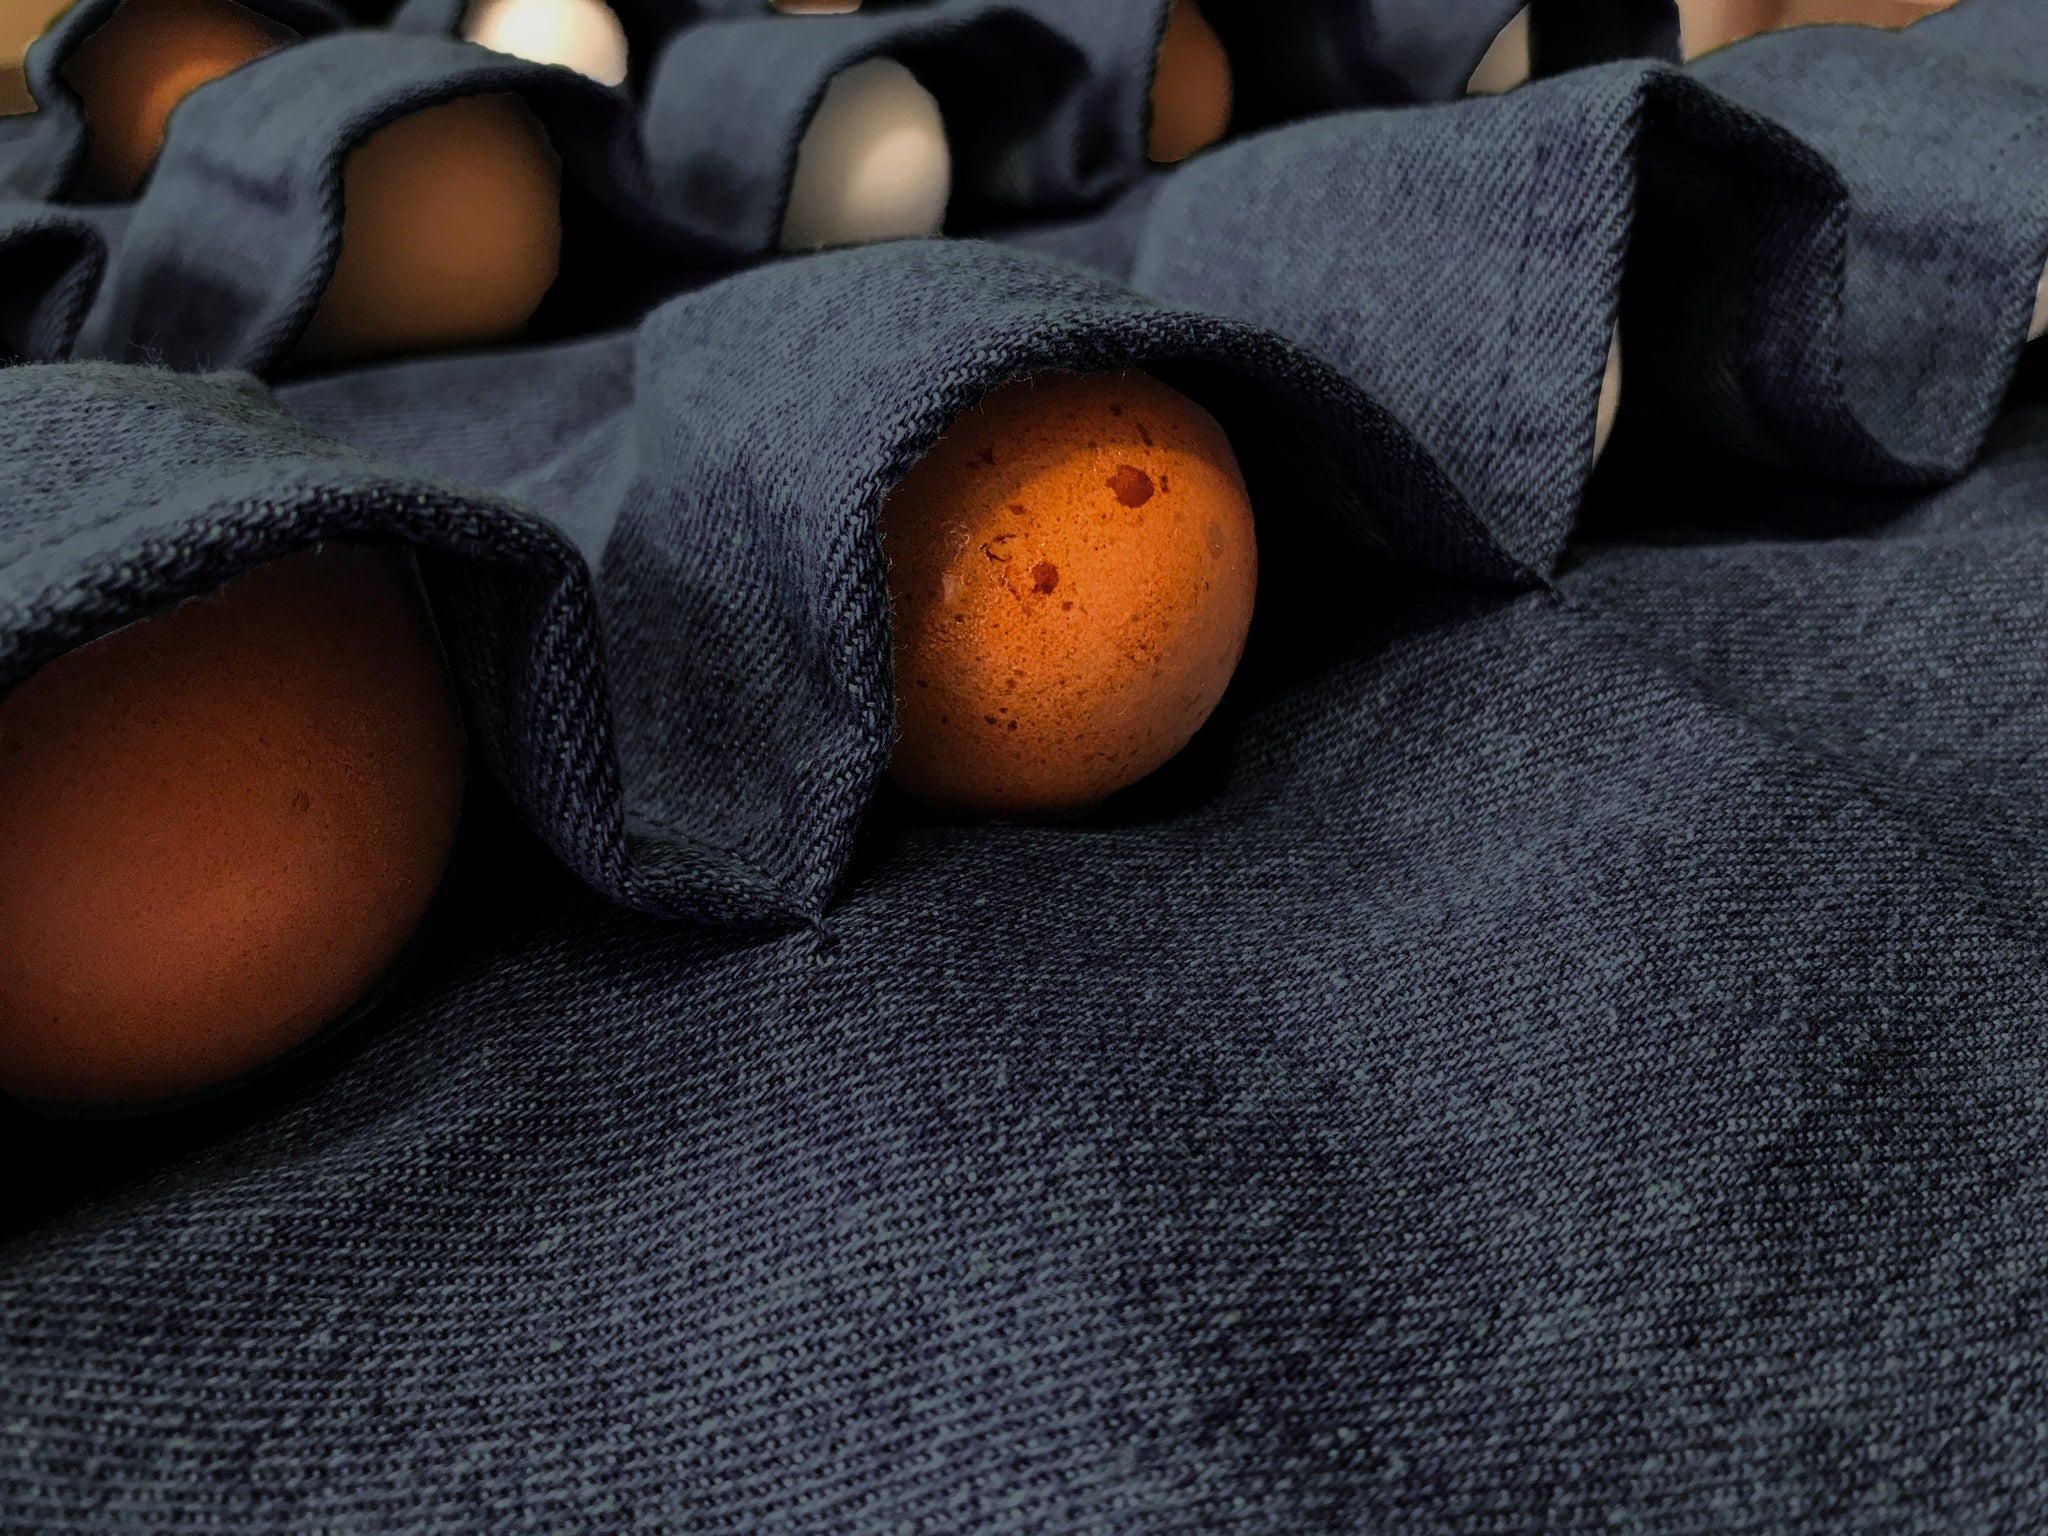 Coop Supplies Egg Collecting Apron-Backyard Barnyard